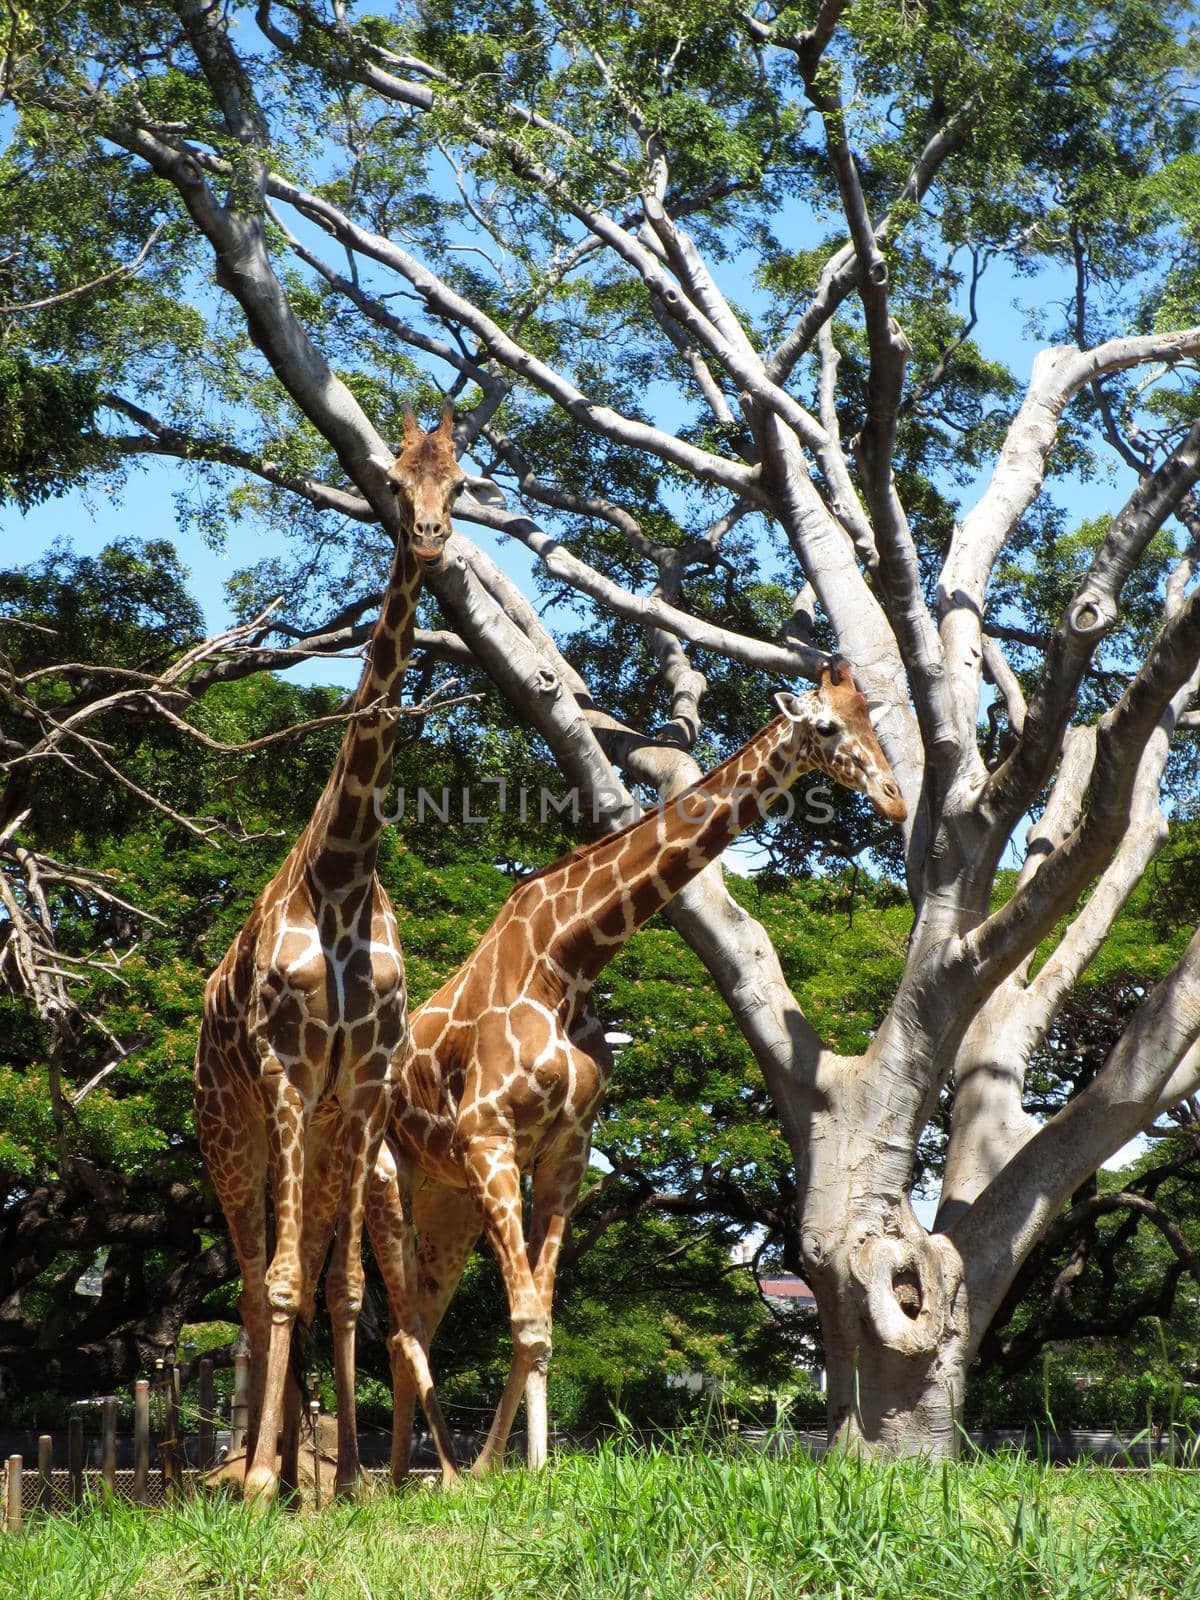 Two giraffe walks in the grass at the Honolulu Zoo.